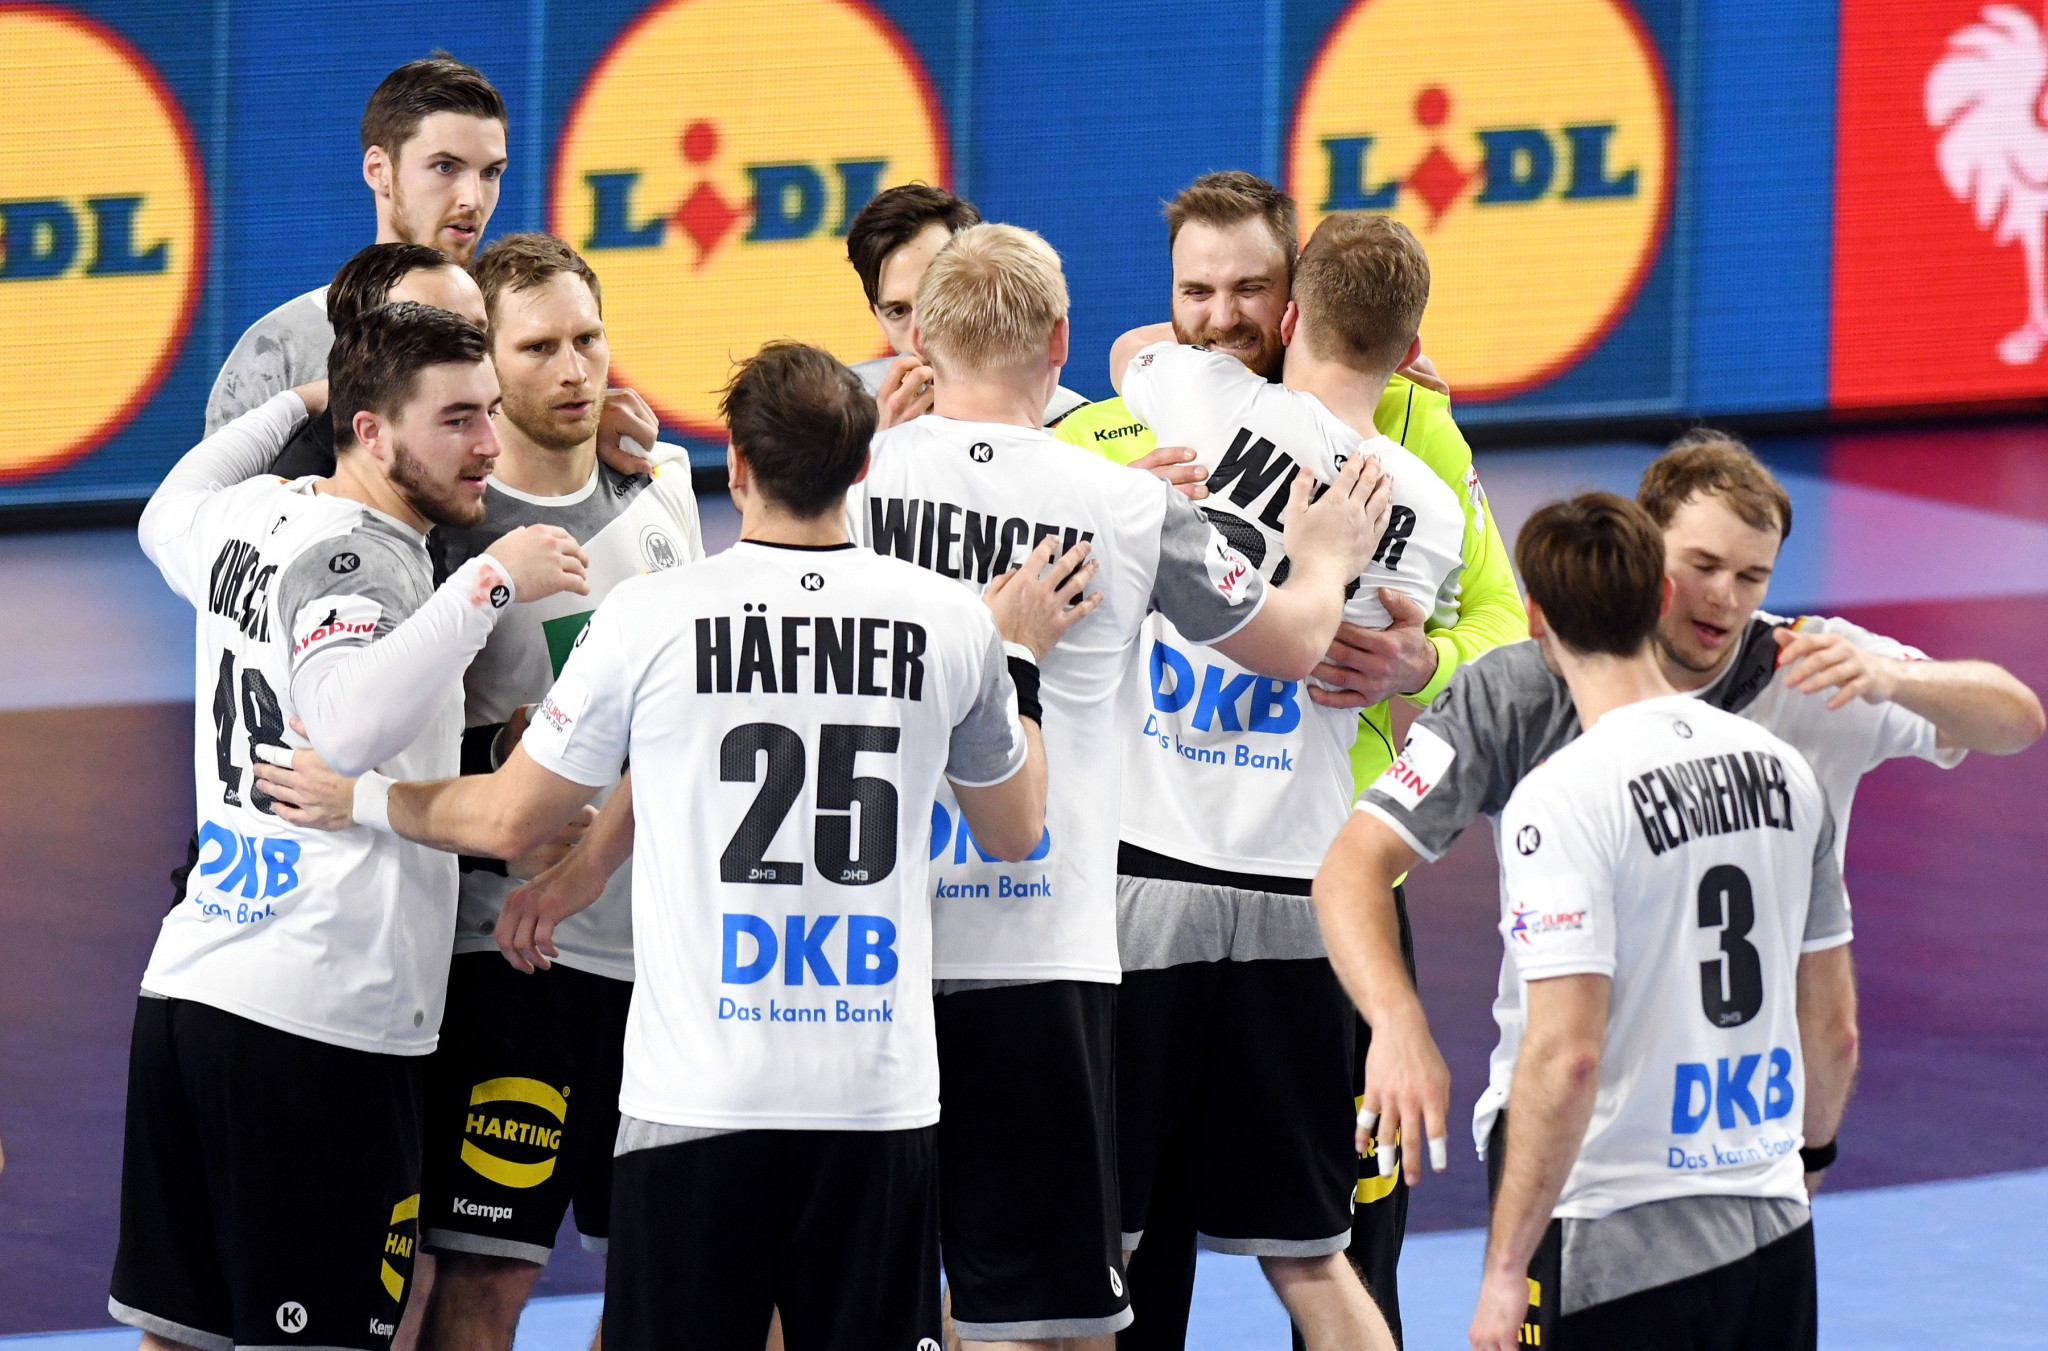 Germany come back to defeat Czech Republic at European Men’s Handball Championship